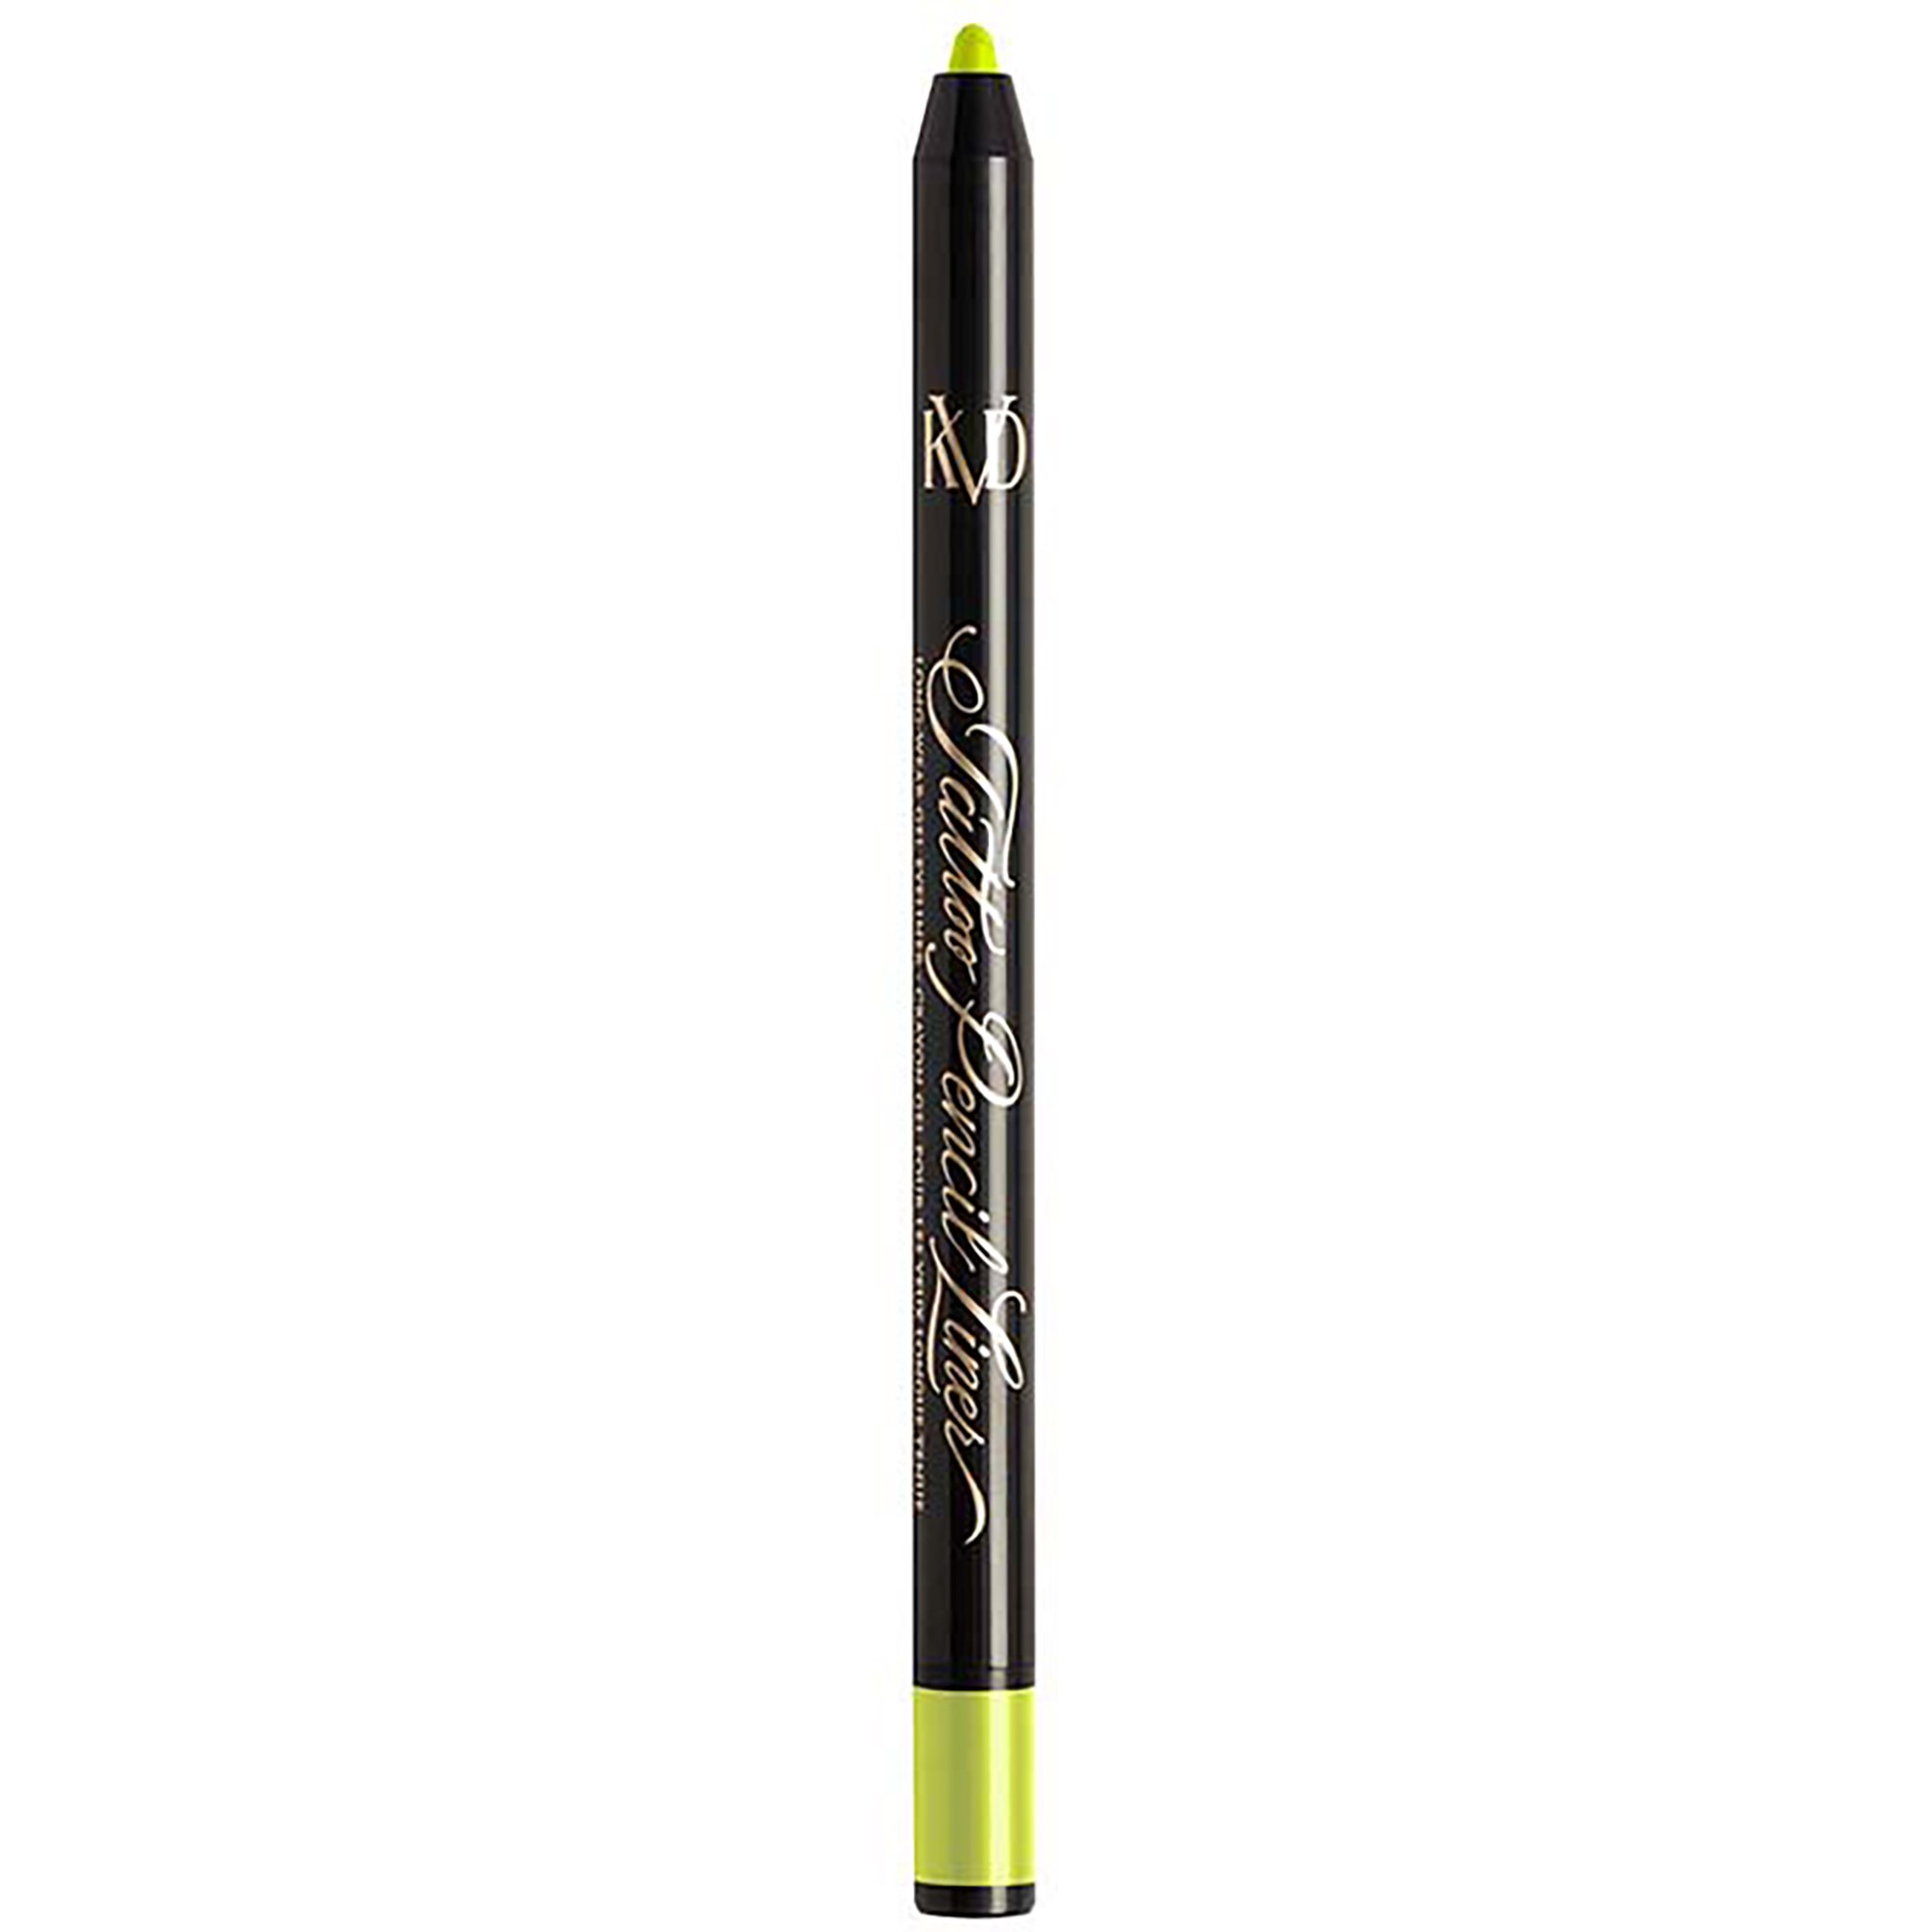 KVD Beauty Tatoo Pencil Liner Radium Green